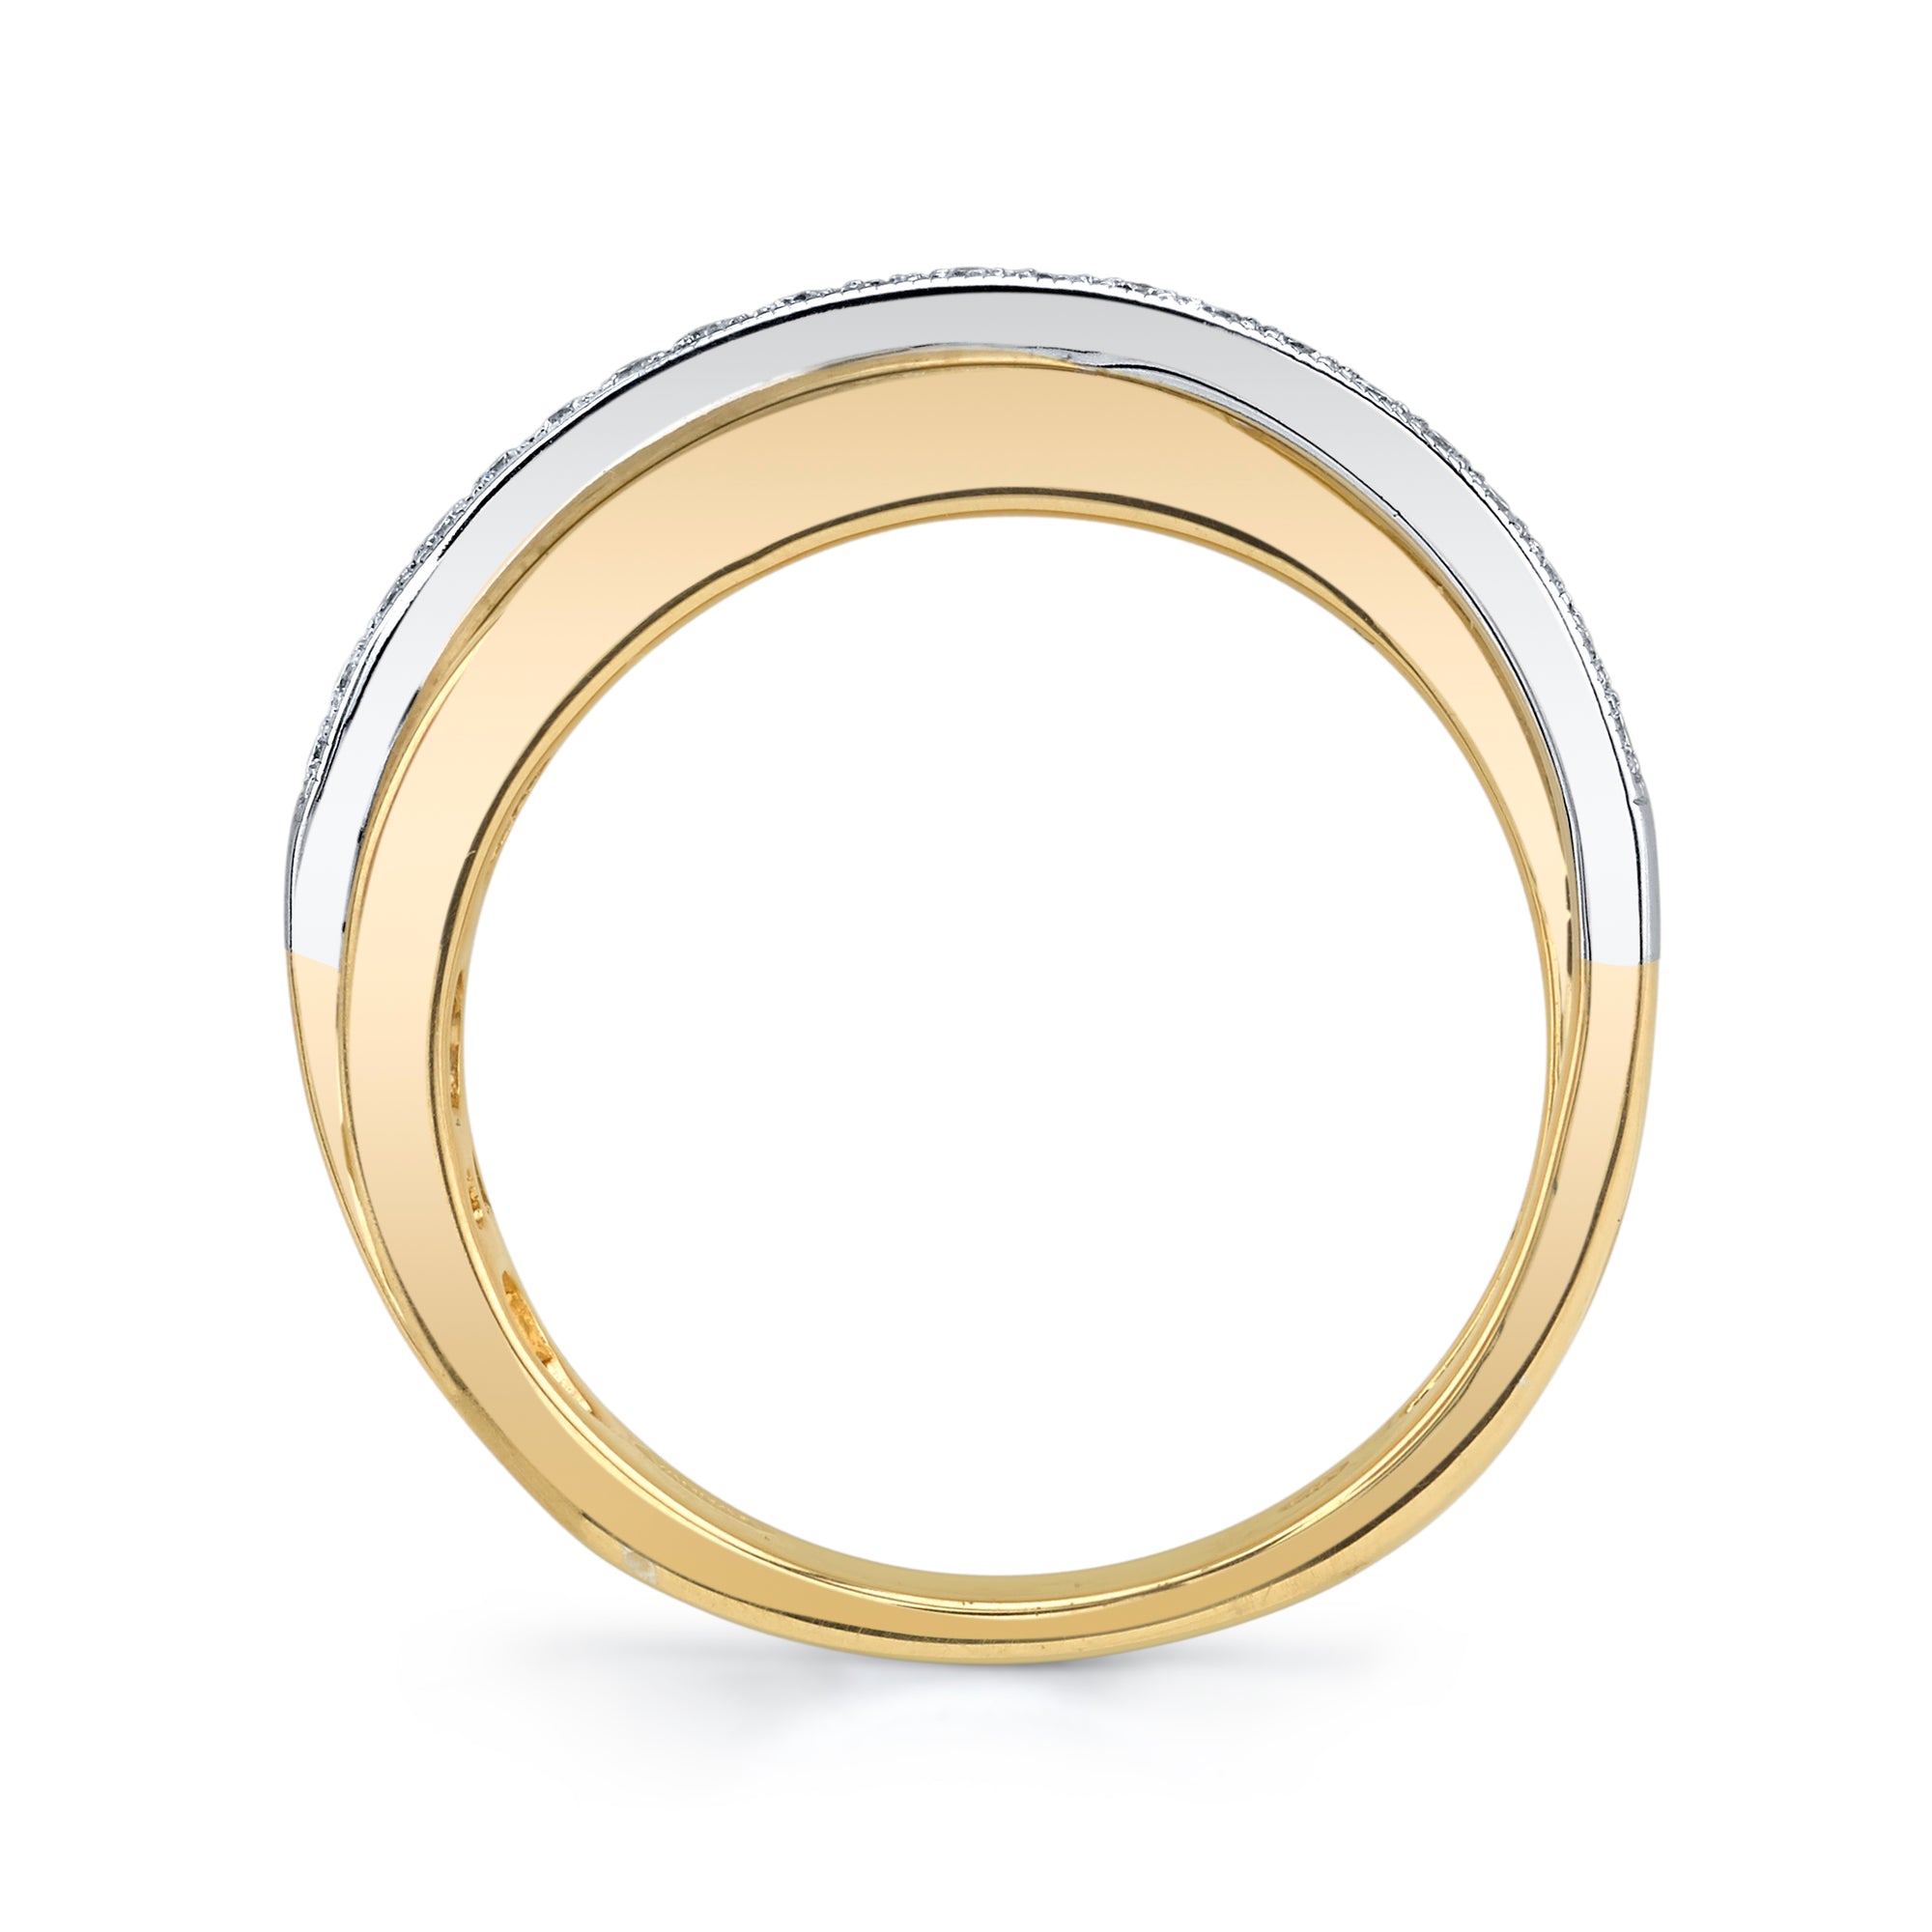 Minimalist Double Chevron Diamond Ring in Two-Tone 14K Gold Lr51826m45jj LV